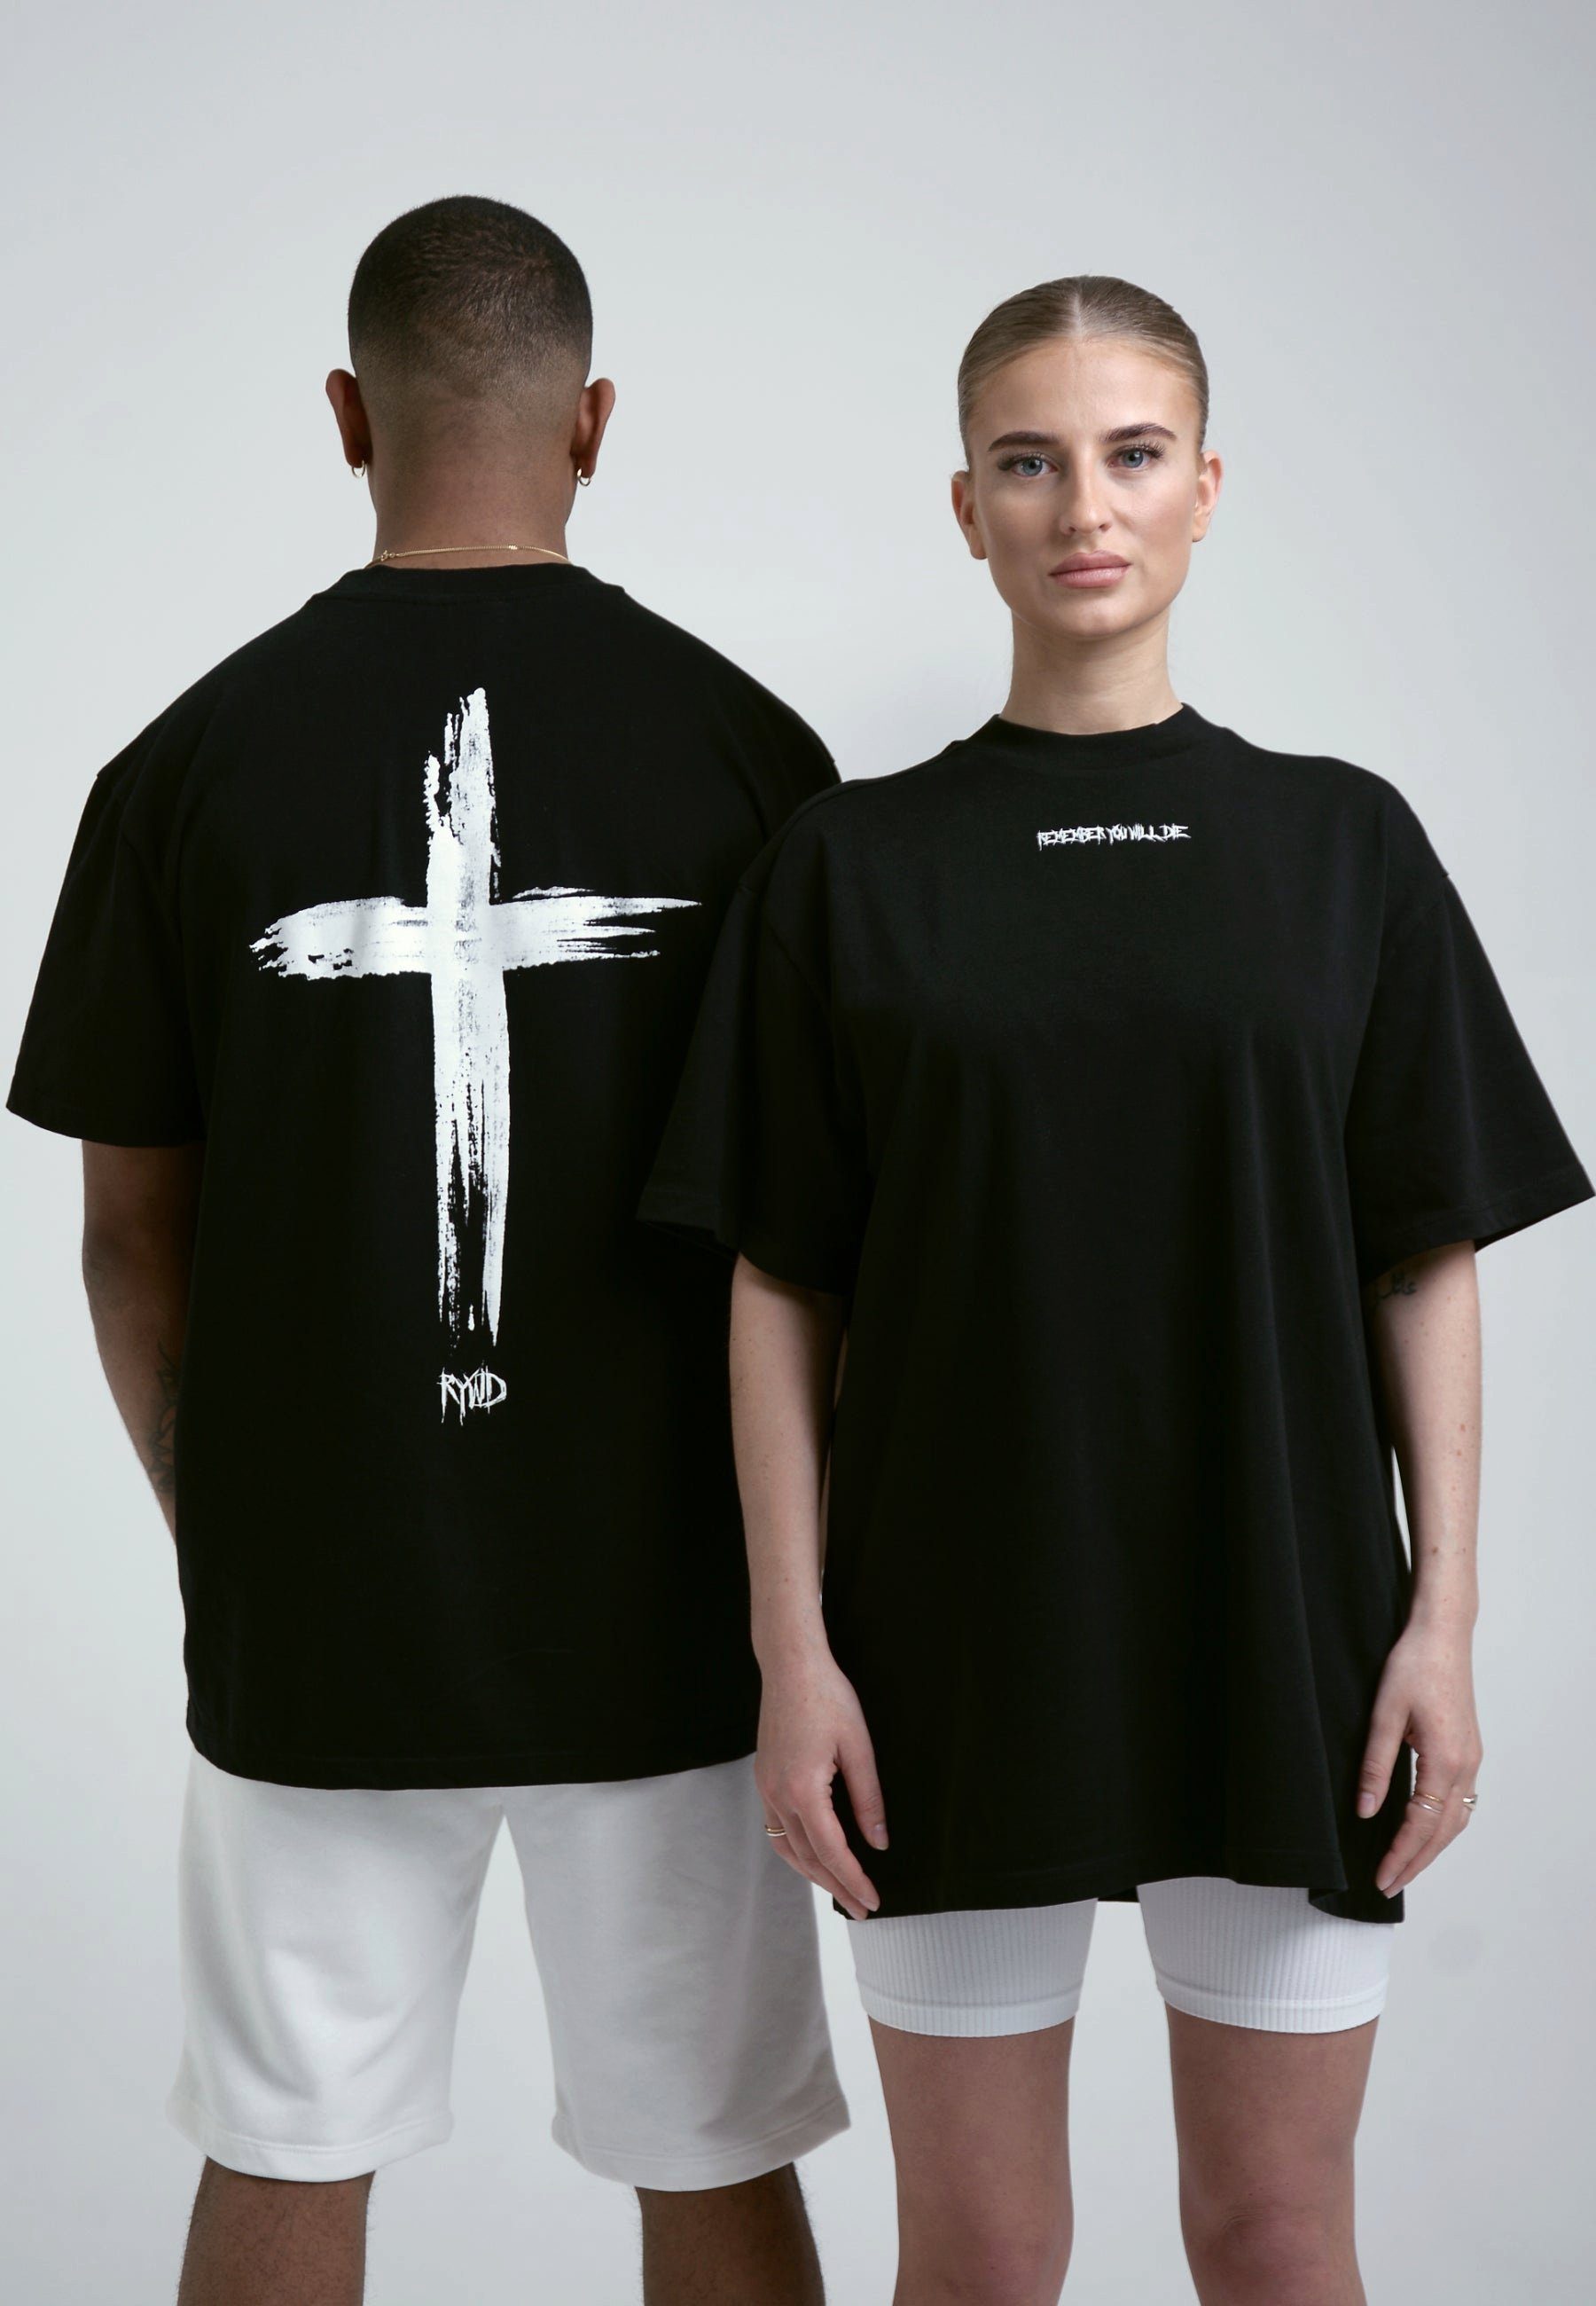 RYWD Cross T-Shirt Schwarz T-Shirt - Remember will die you